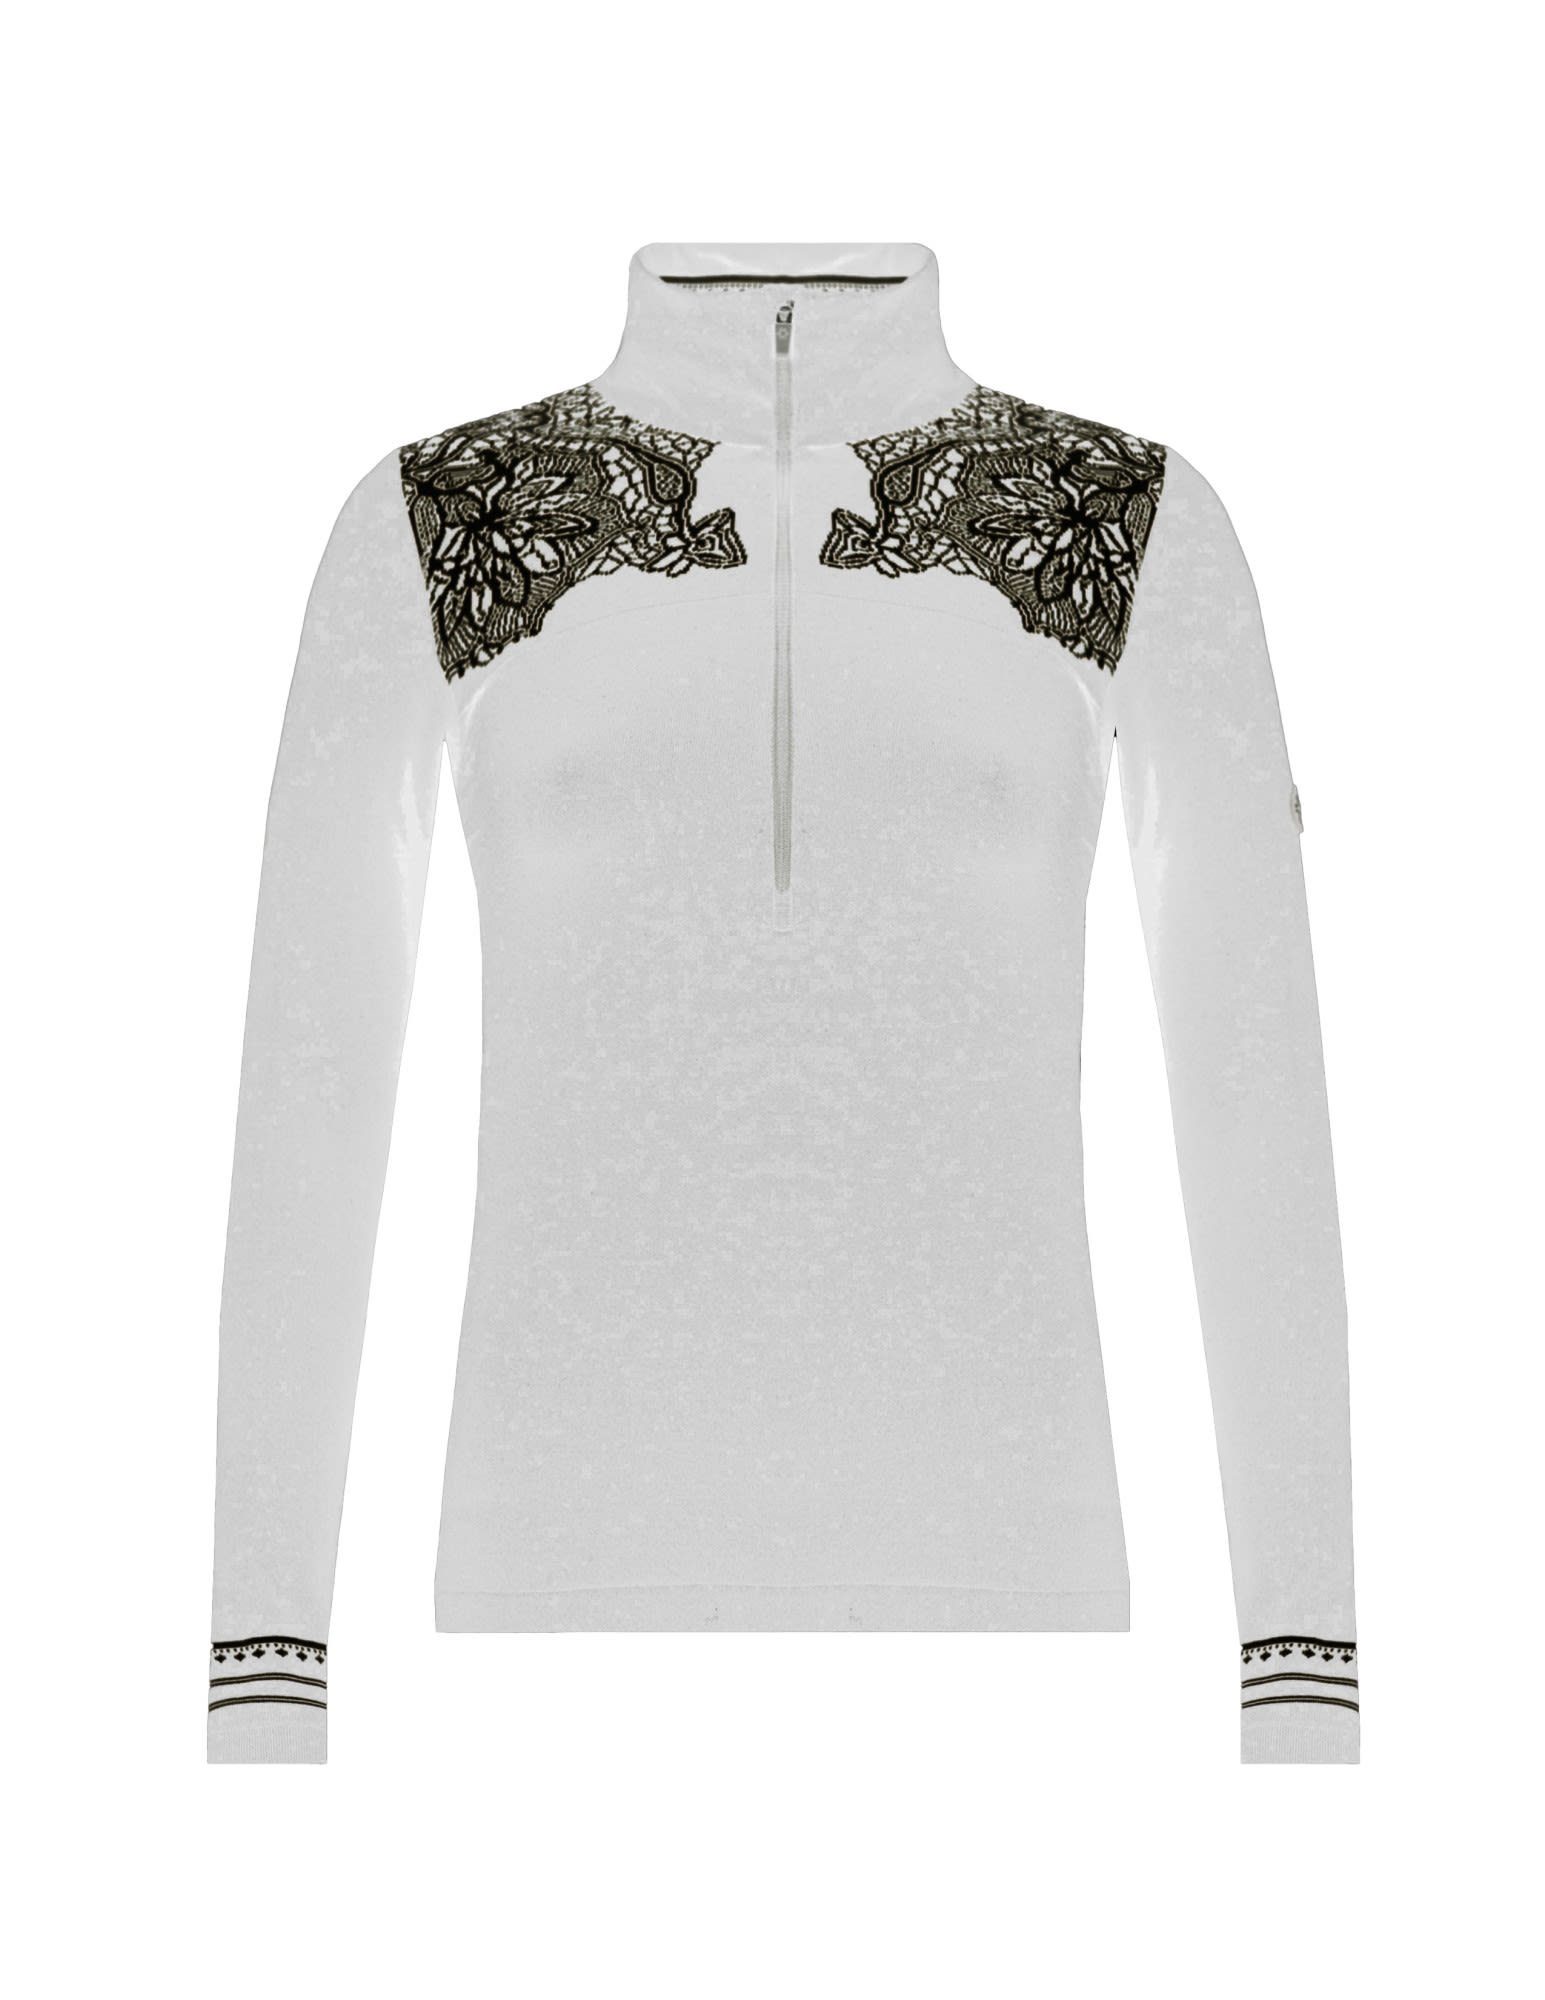 Ofelia Newland - Auckland Damen Black White New Sweater W Zealand Fleecepullover